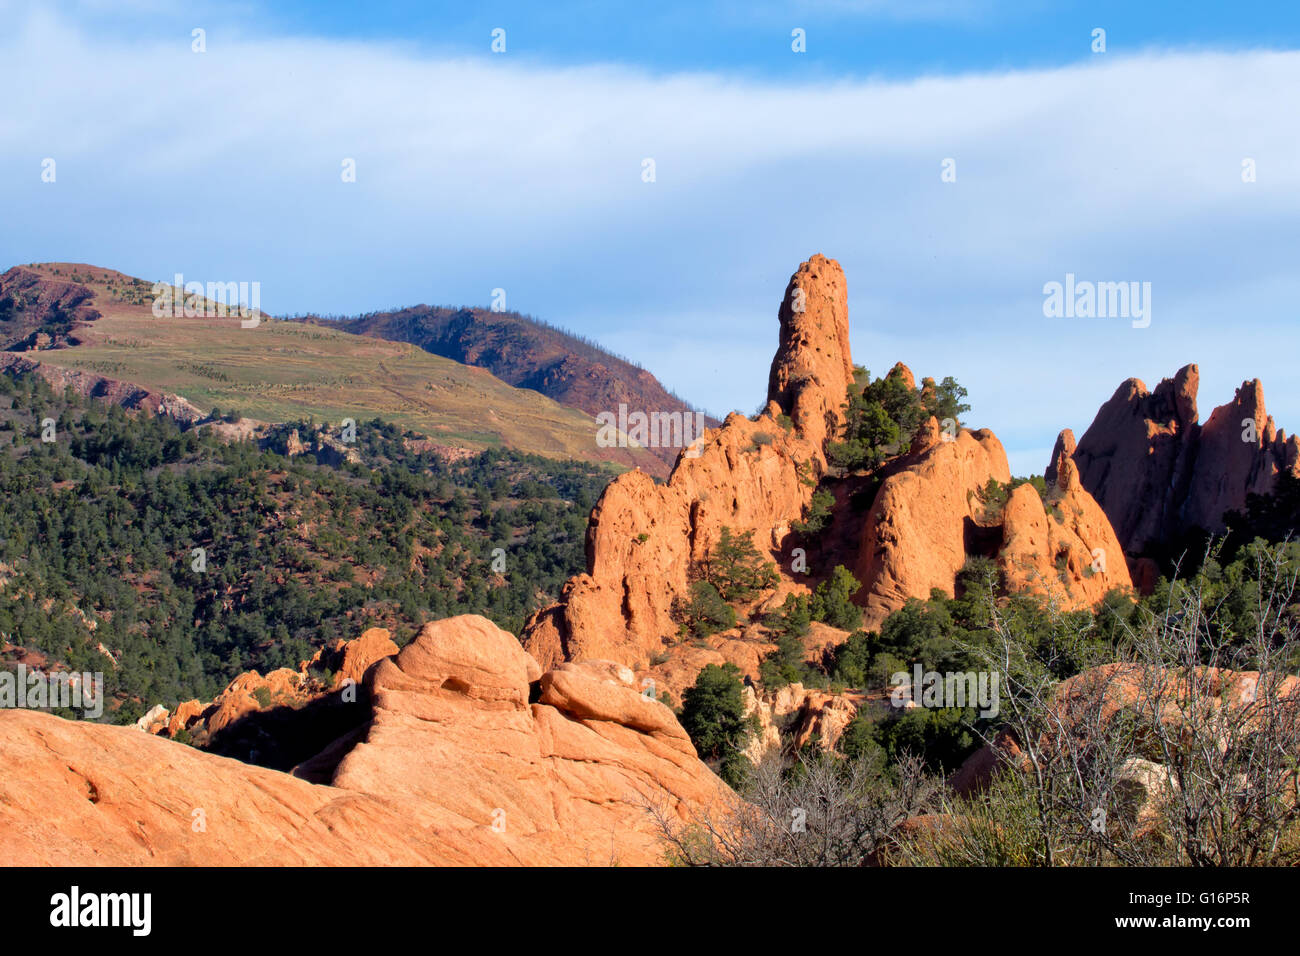 The rock formations of Garden of the Gods in Colorado Springs, Colorado Stock Photo